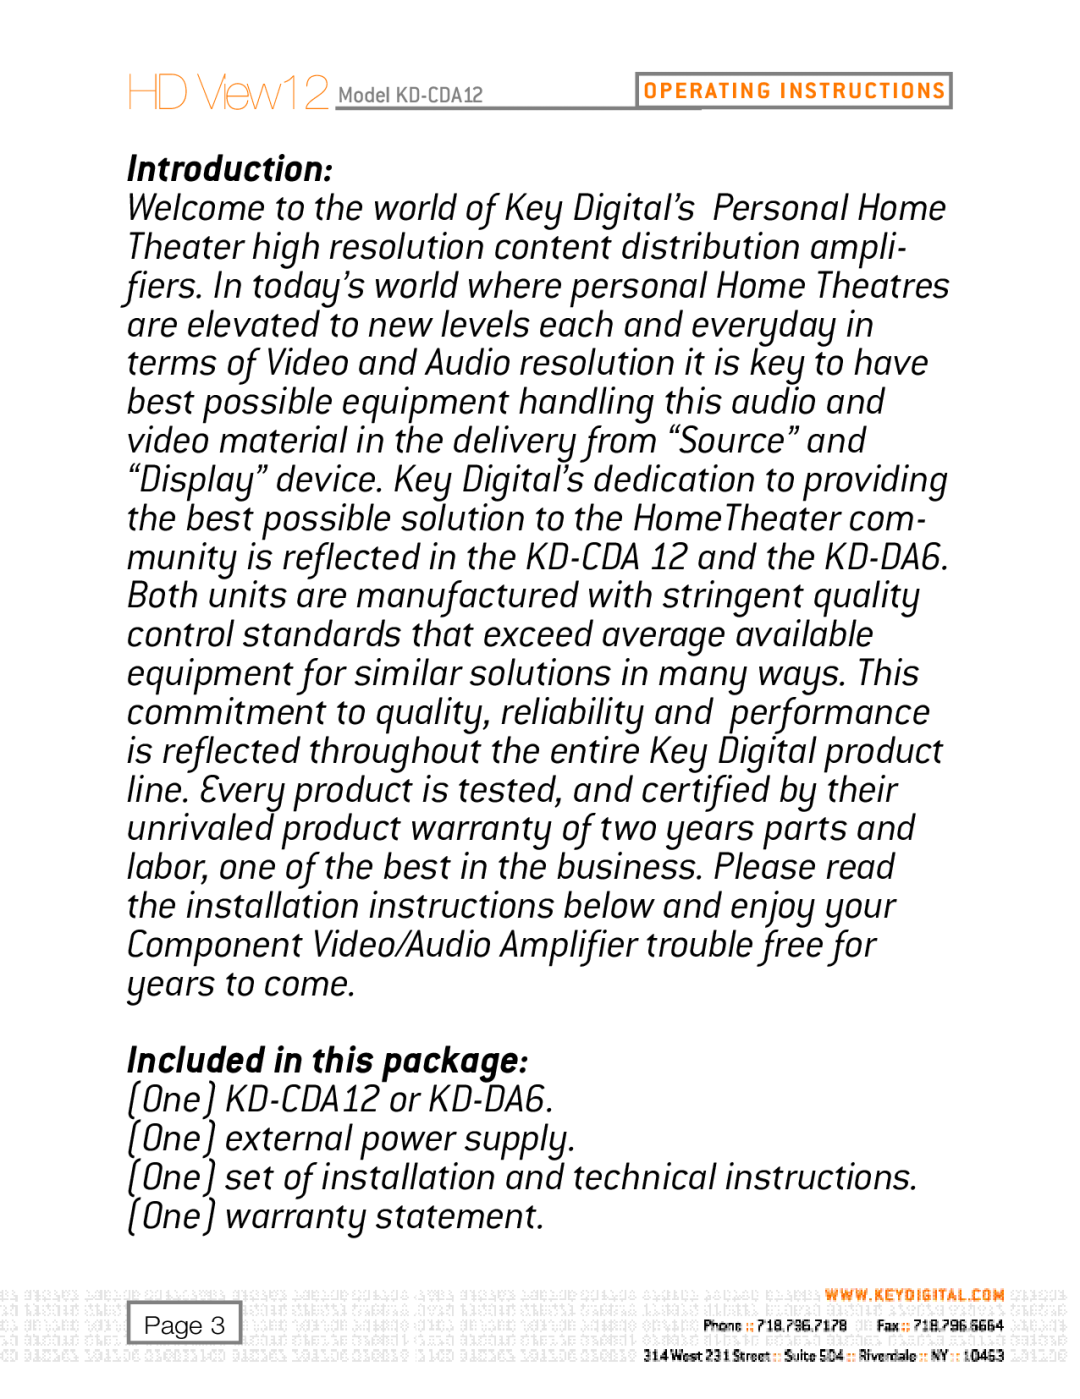 Key Digital KD-CDA12, KD-DA6 user manual Introduction, One external power supply, One warranty statement 